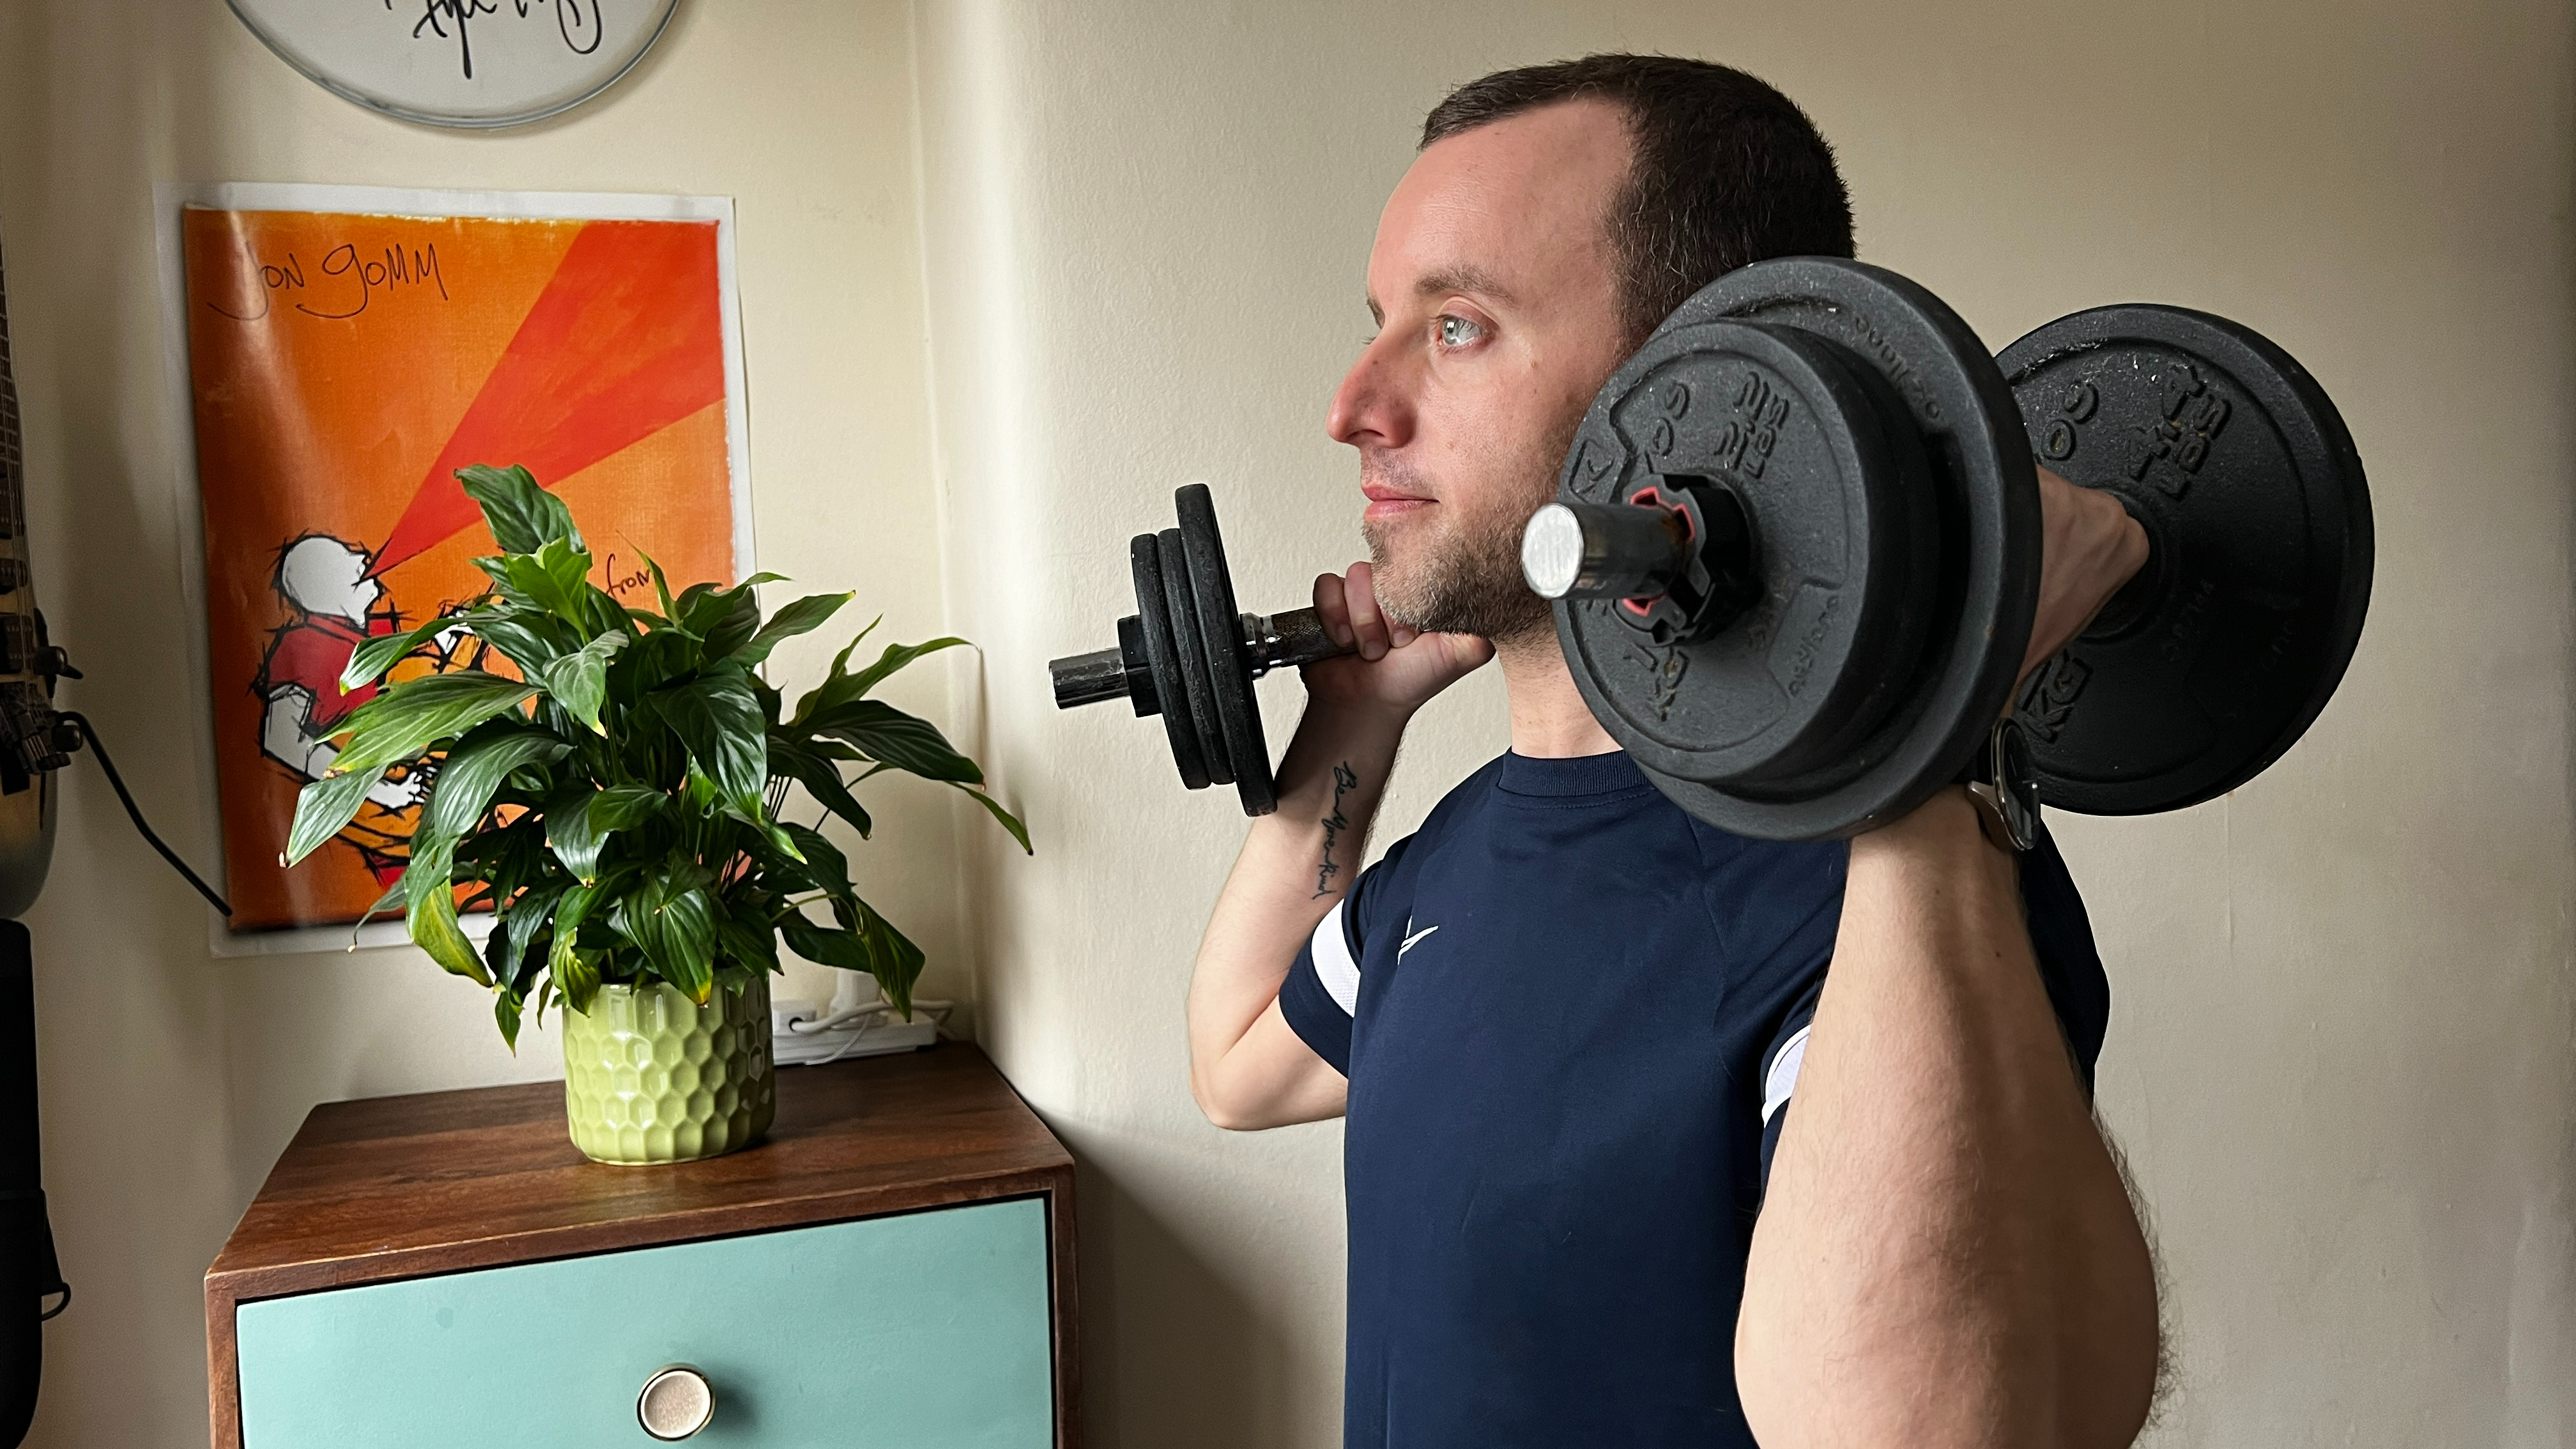 DISTINCT Dumbbell HIIT Workout – Full Body